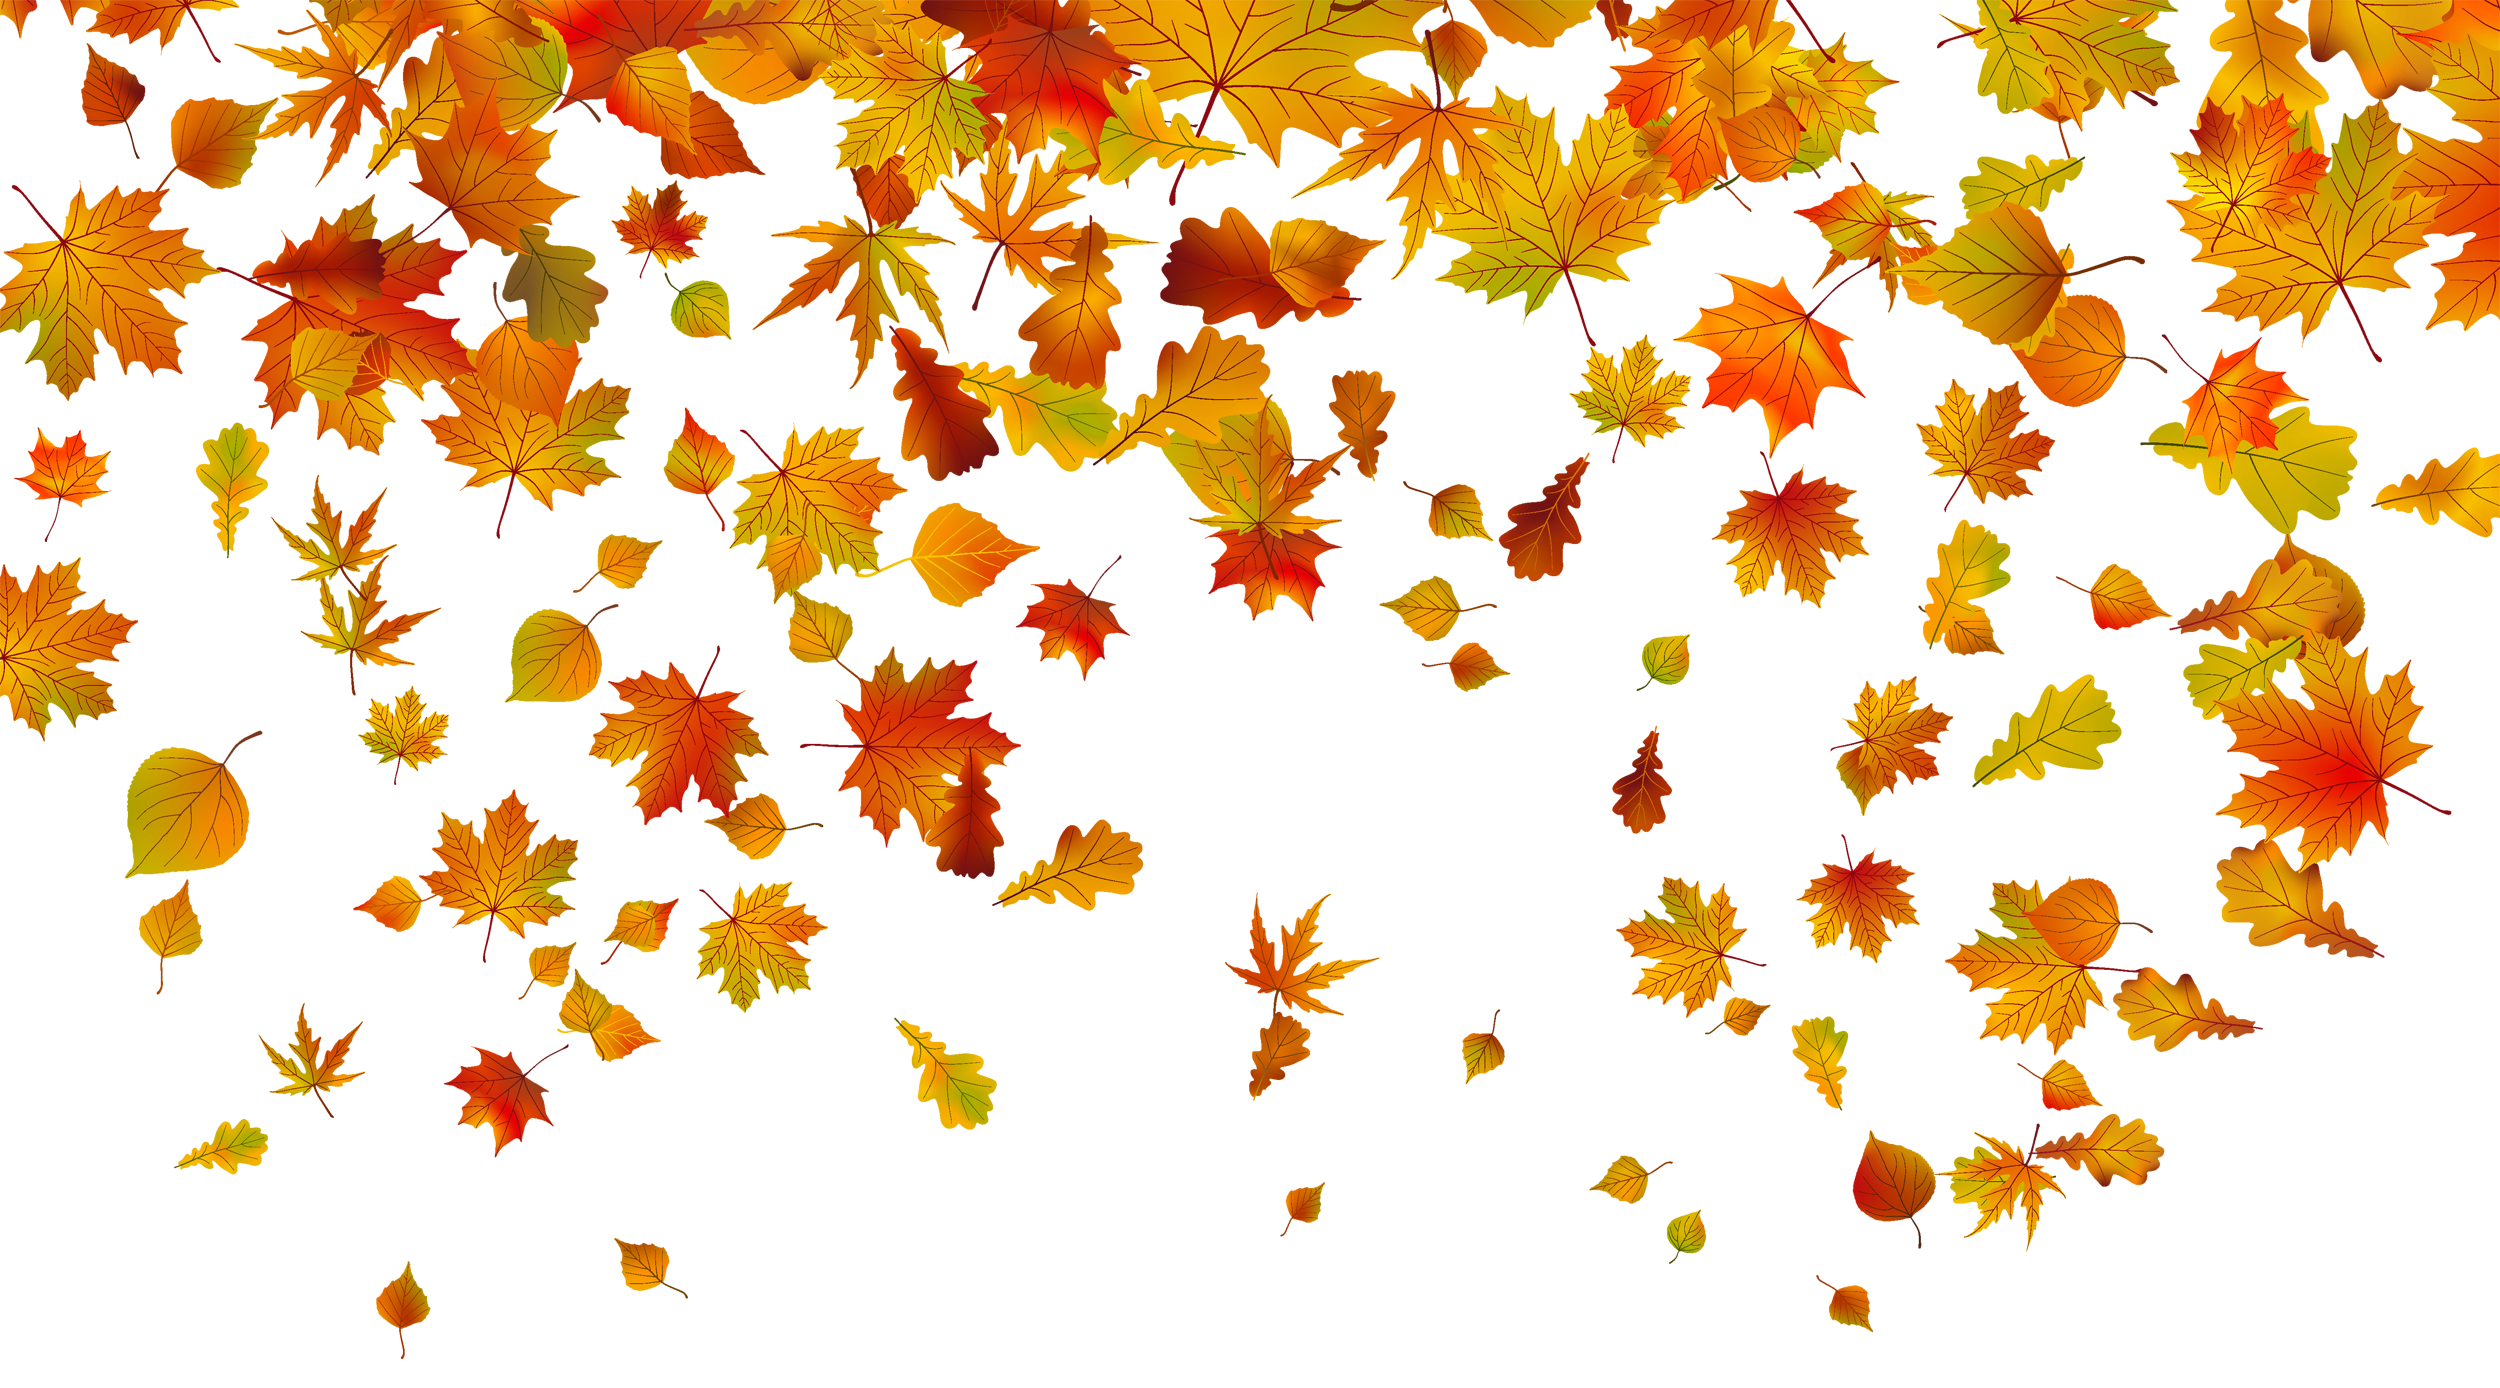 Autumn Falling Vector Leaf Download HQ PNG Image